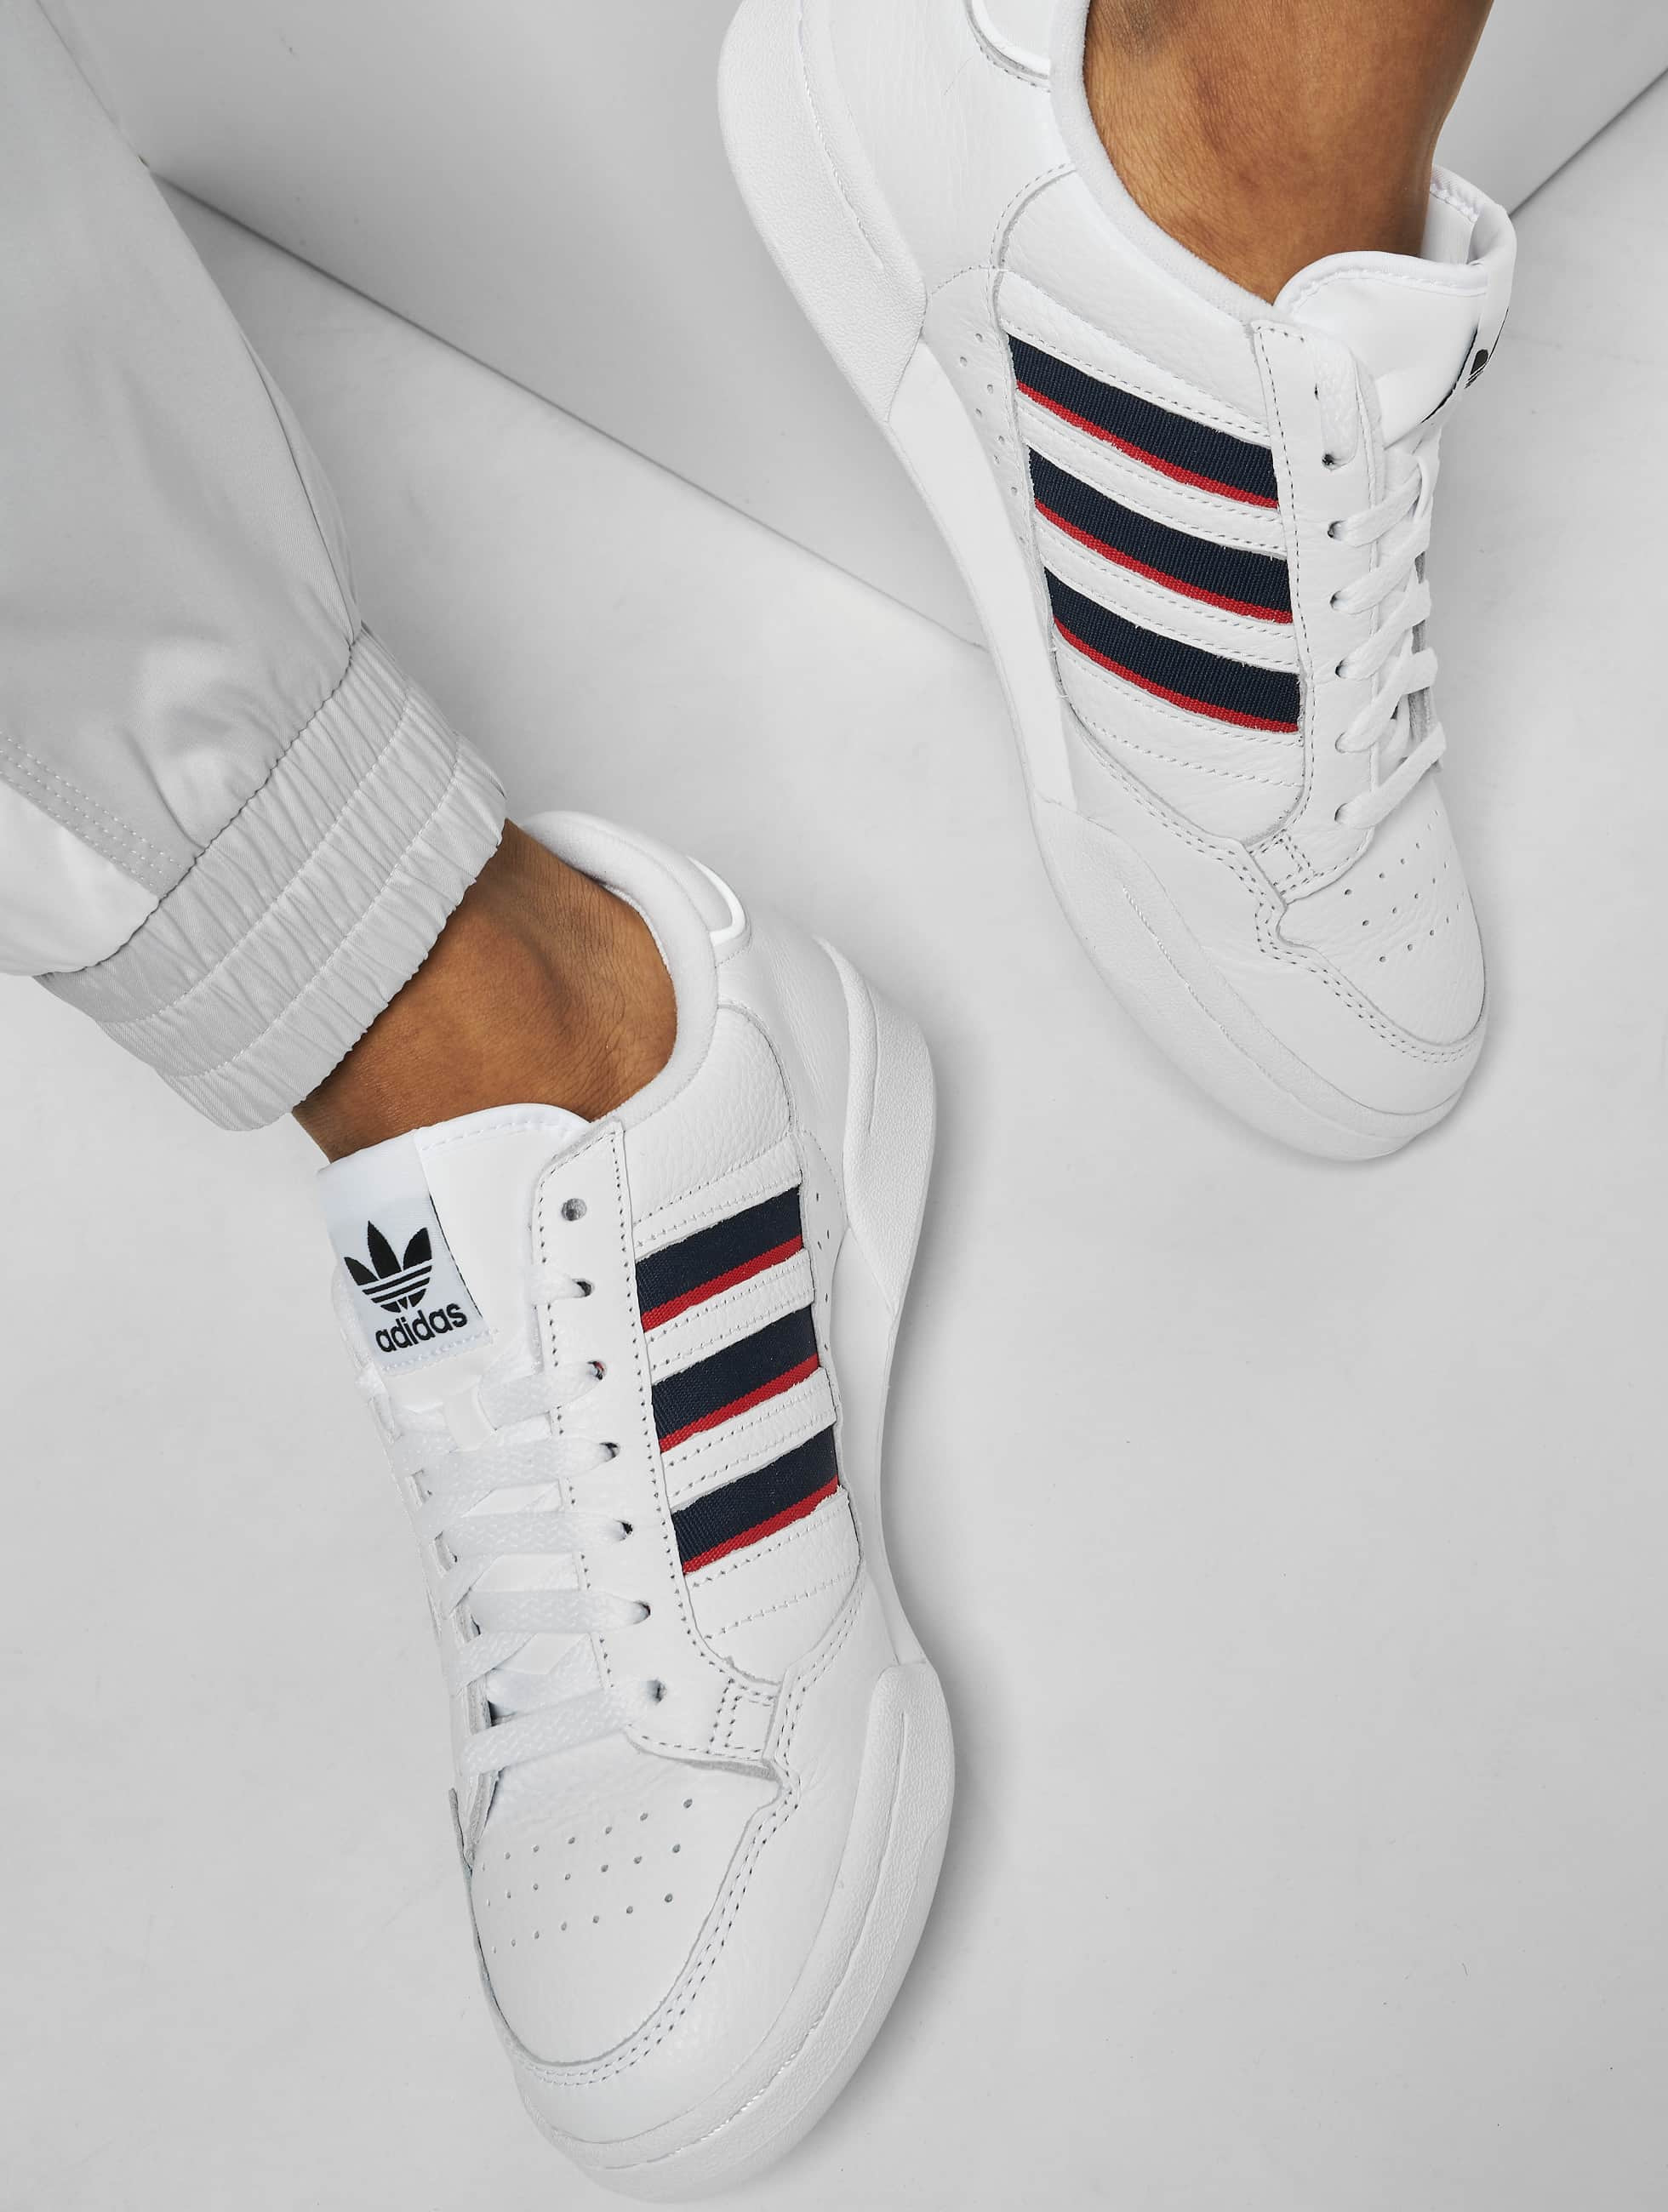 adidas Originals Shoe / Continental 80 Stripe in white 831214